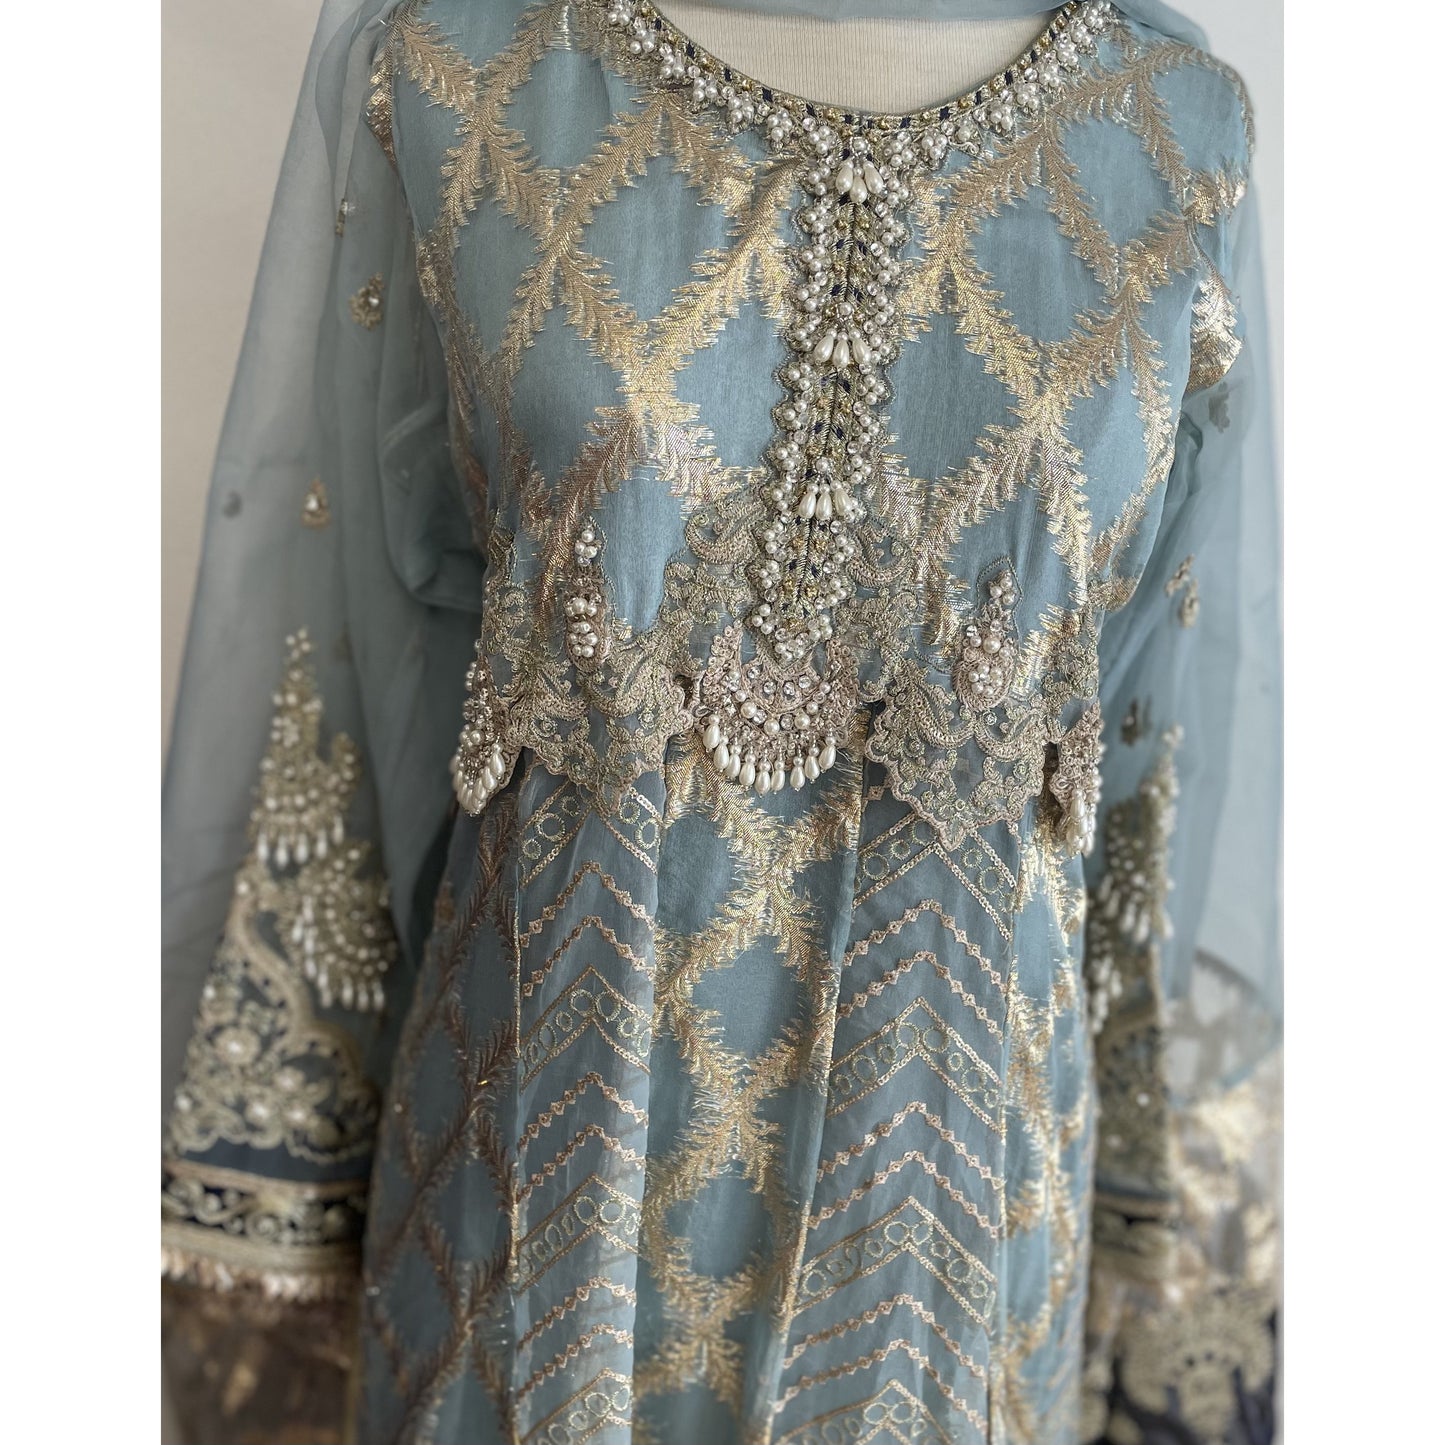 Light blue gorgeous dress - couturebyfarah